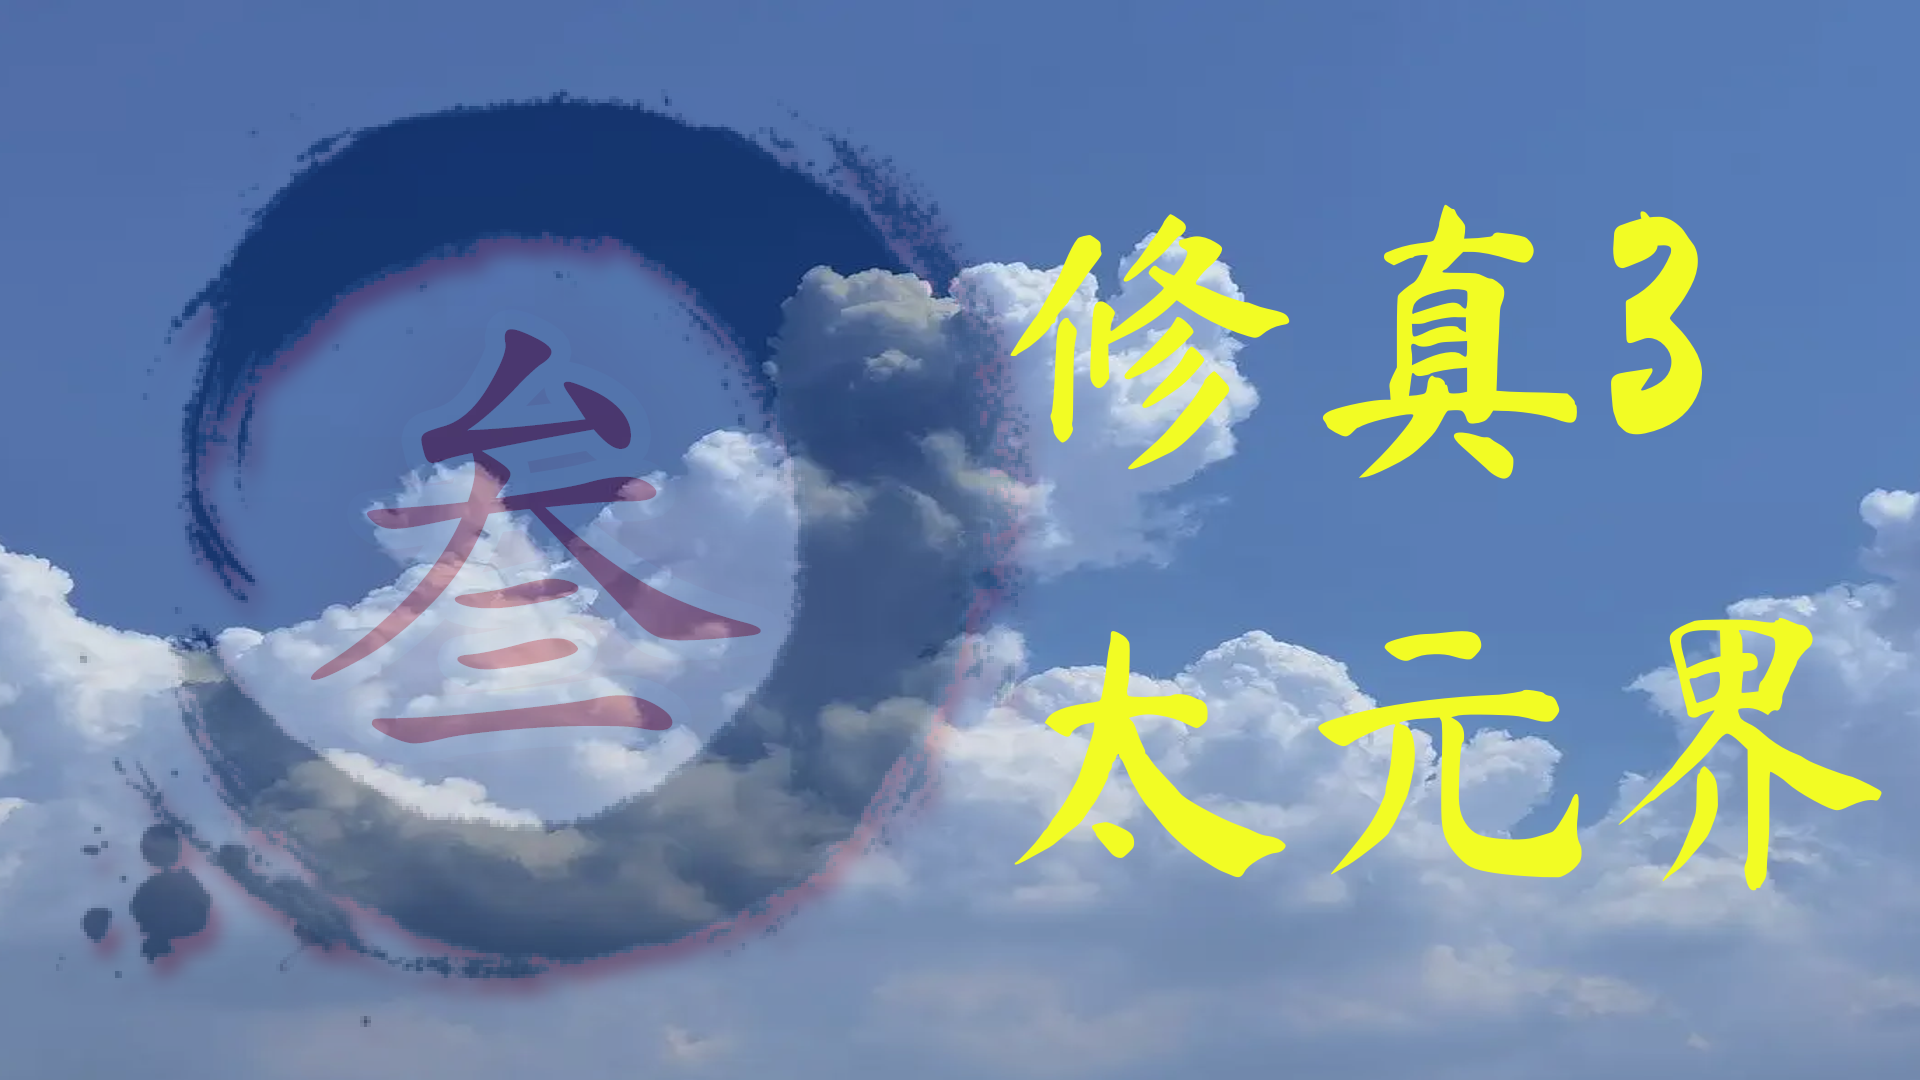 Banner of 修真3太元界 1.68